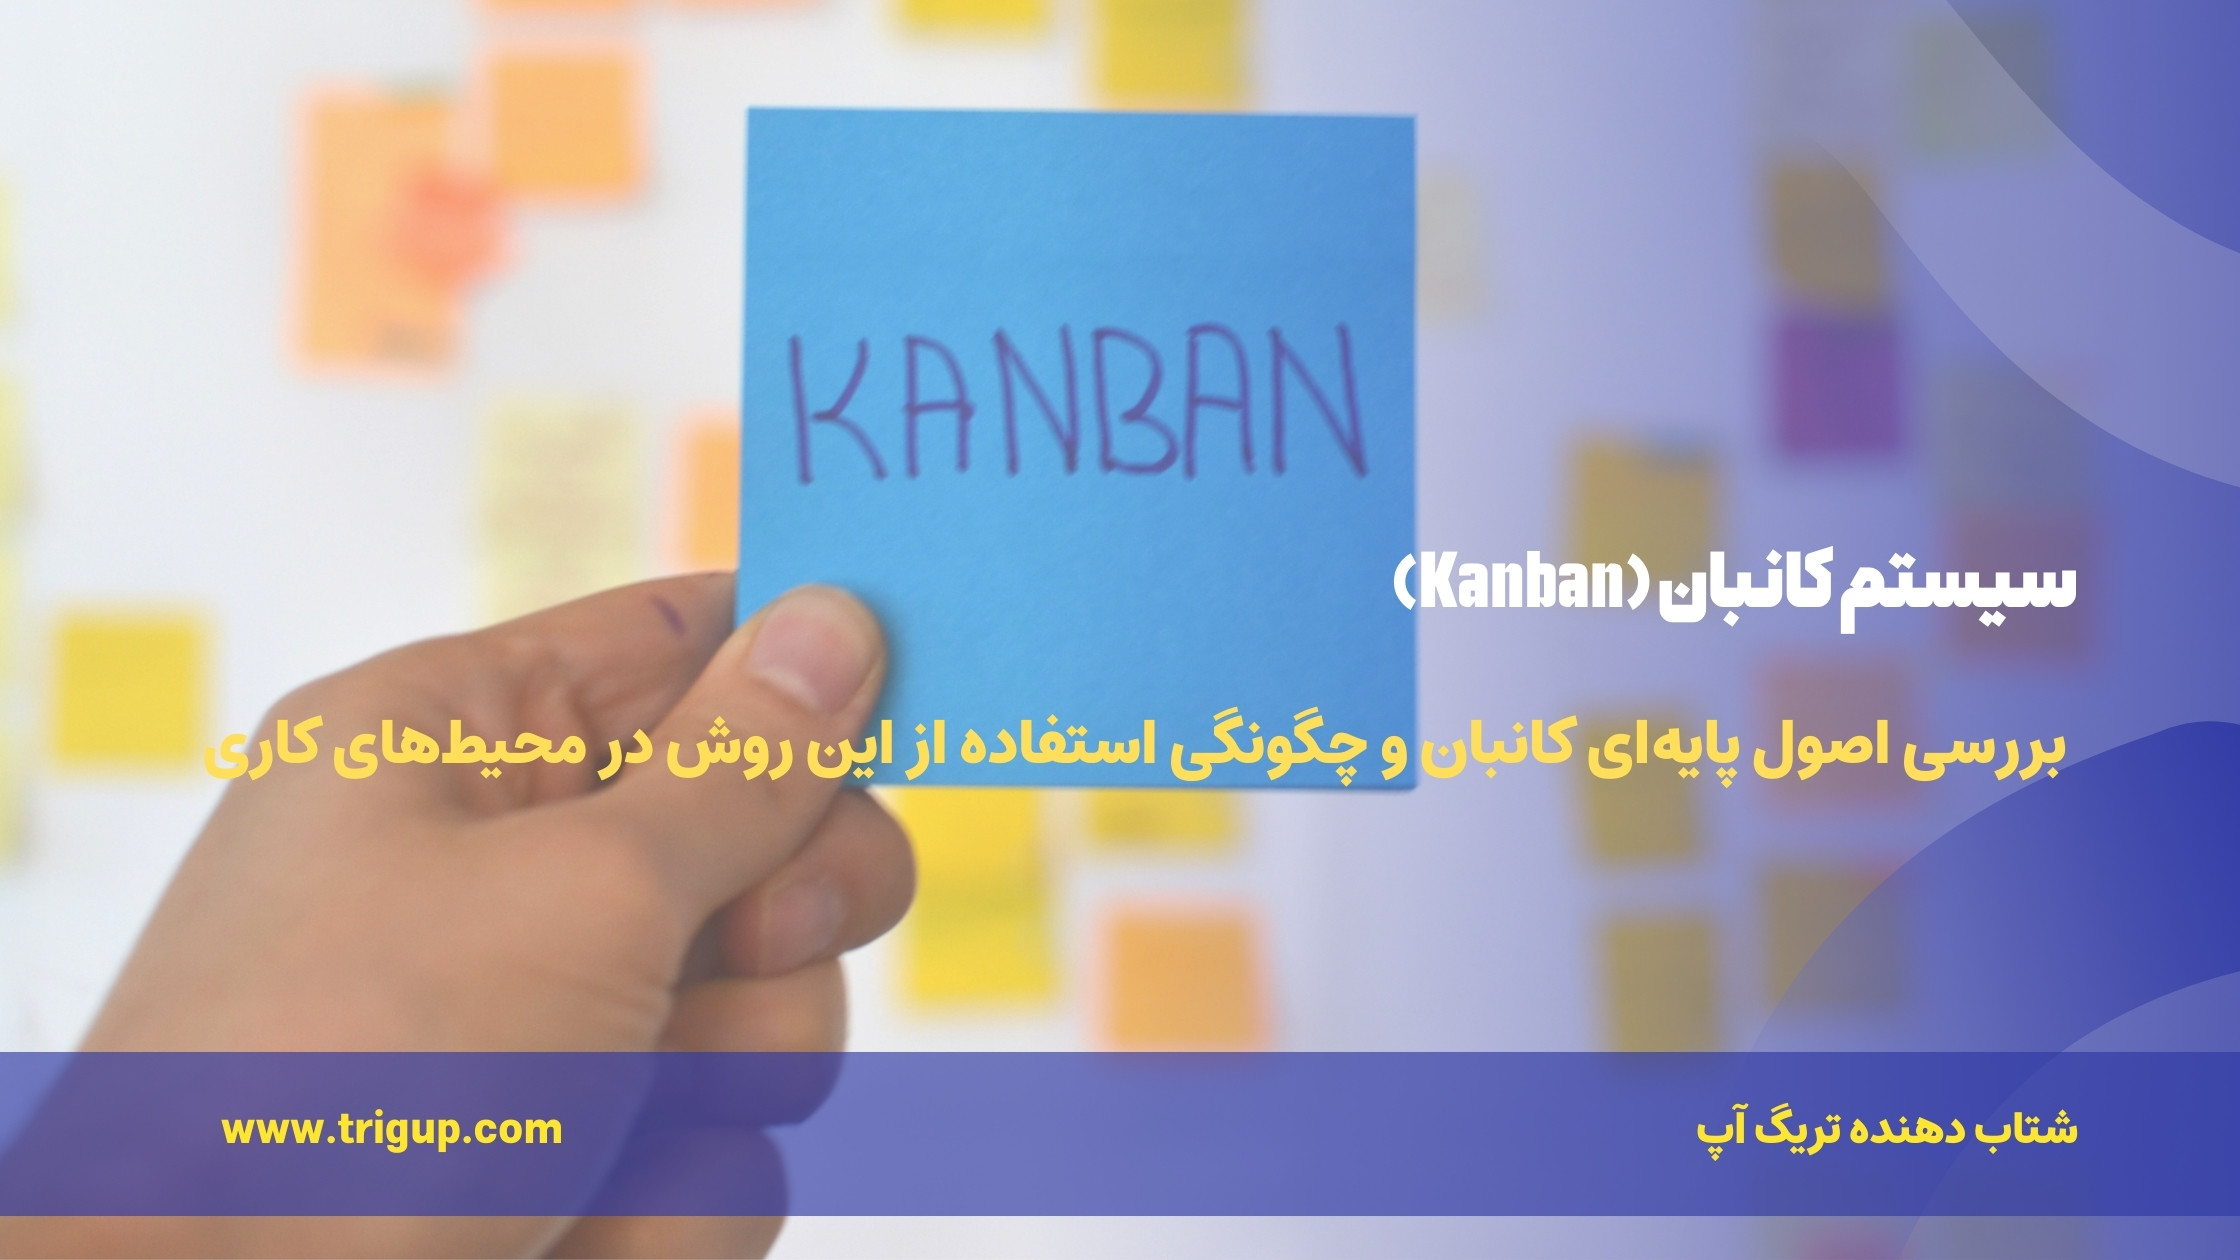 سیستم کانبان (Kanban)